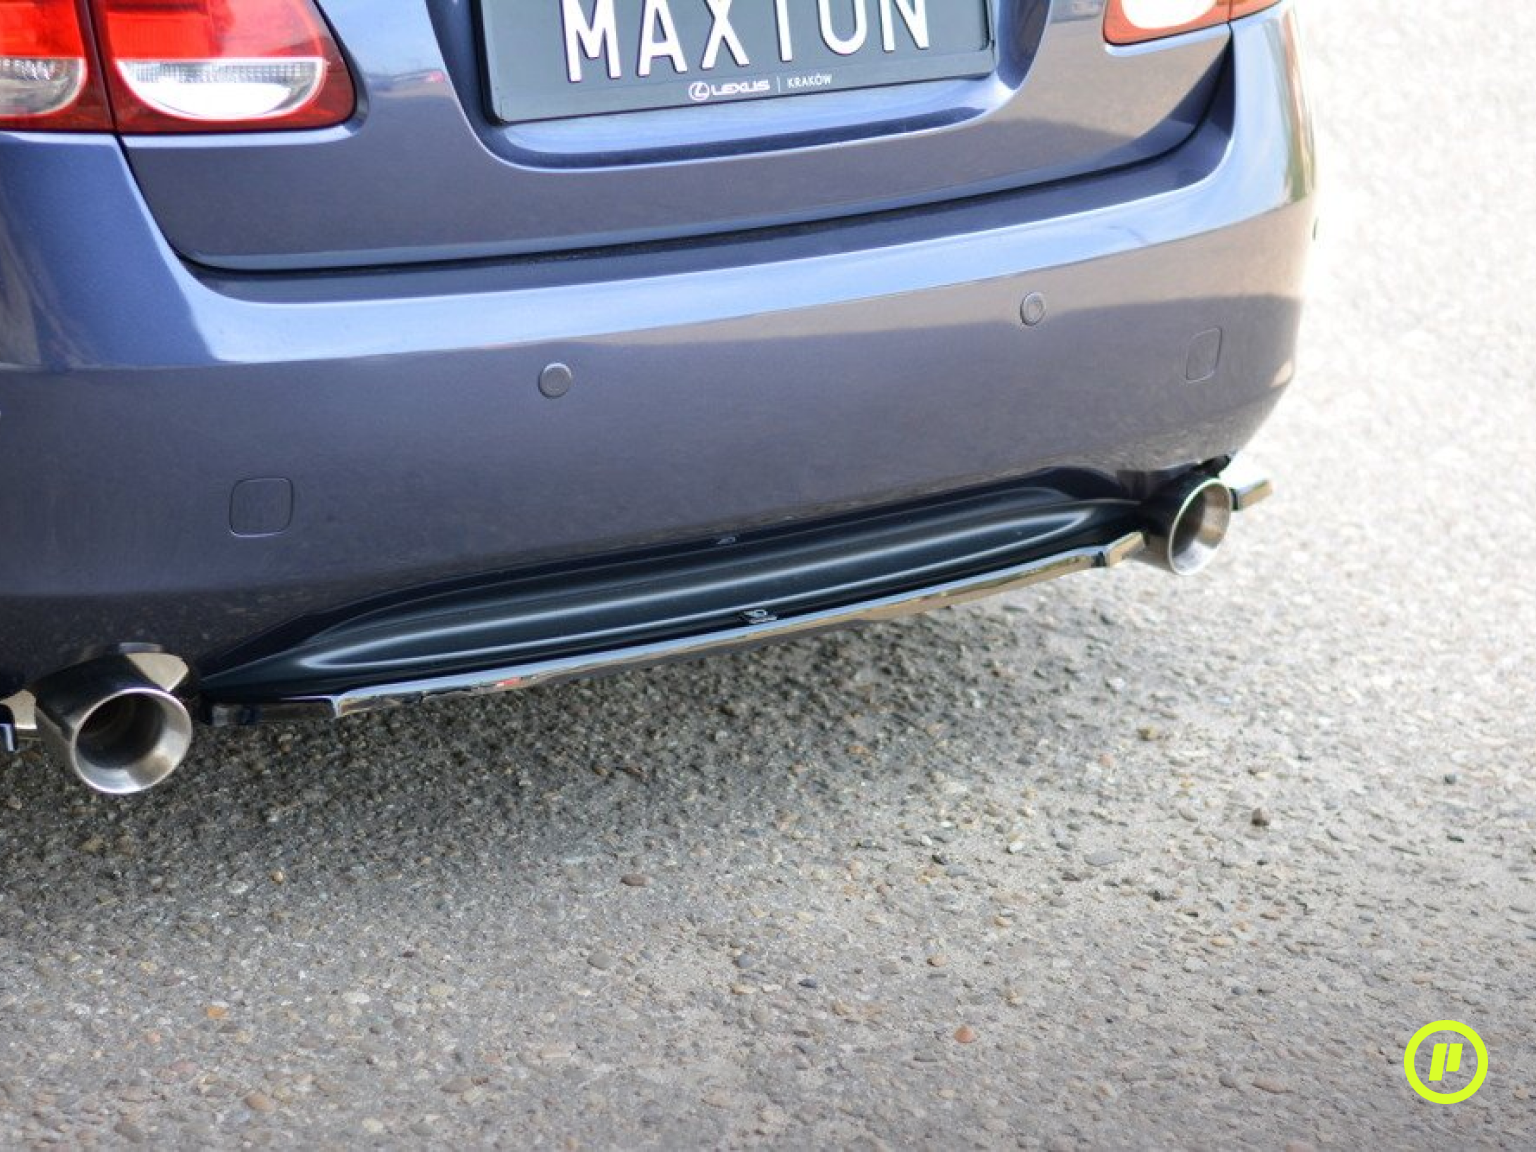 Maxton Design - Central Rear Splitter for Lexus GS (S190 2005 - 2007)